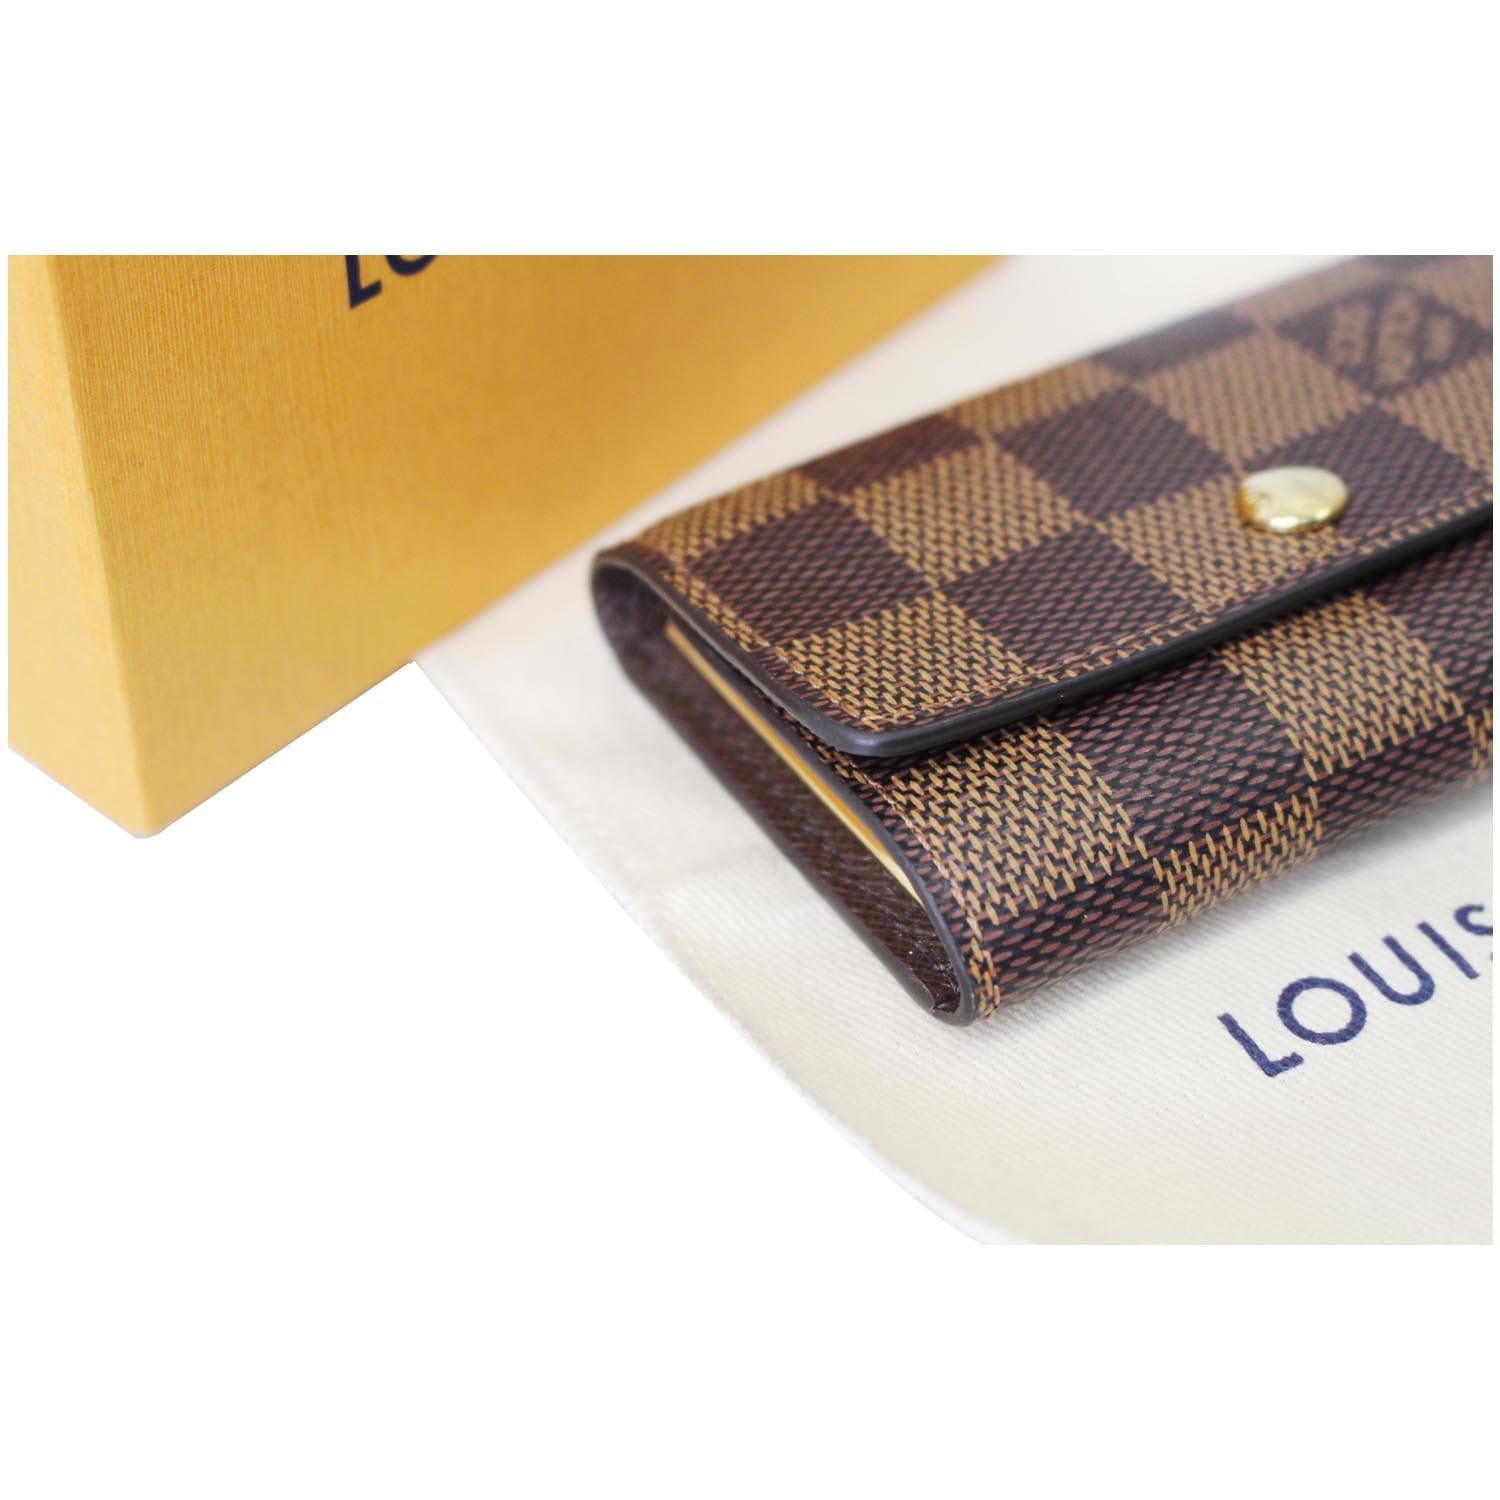 Louis Vuitton Damier Ebene 6 Key Holder